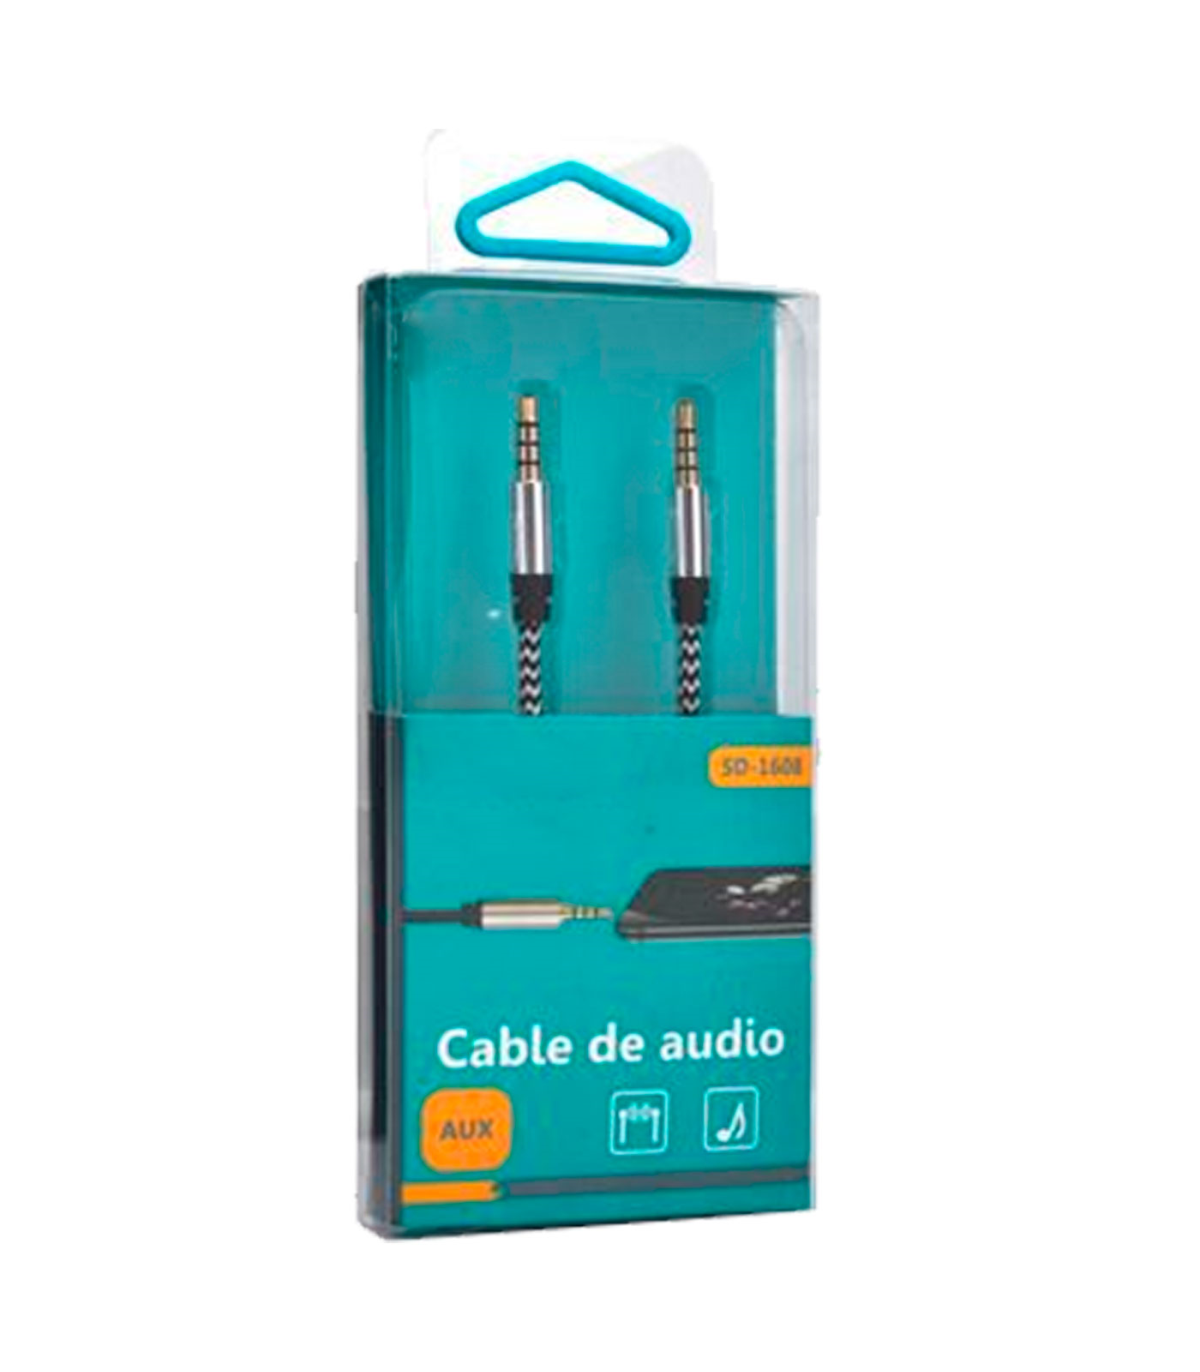 Tradineur - Cable de audio jack, doble salida - Jack 3,5 mm